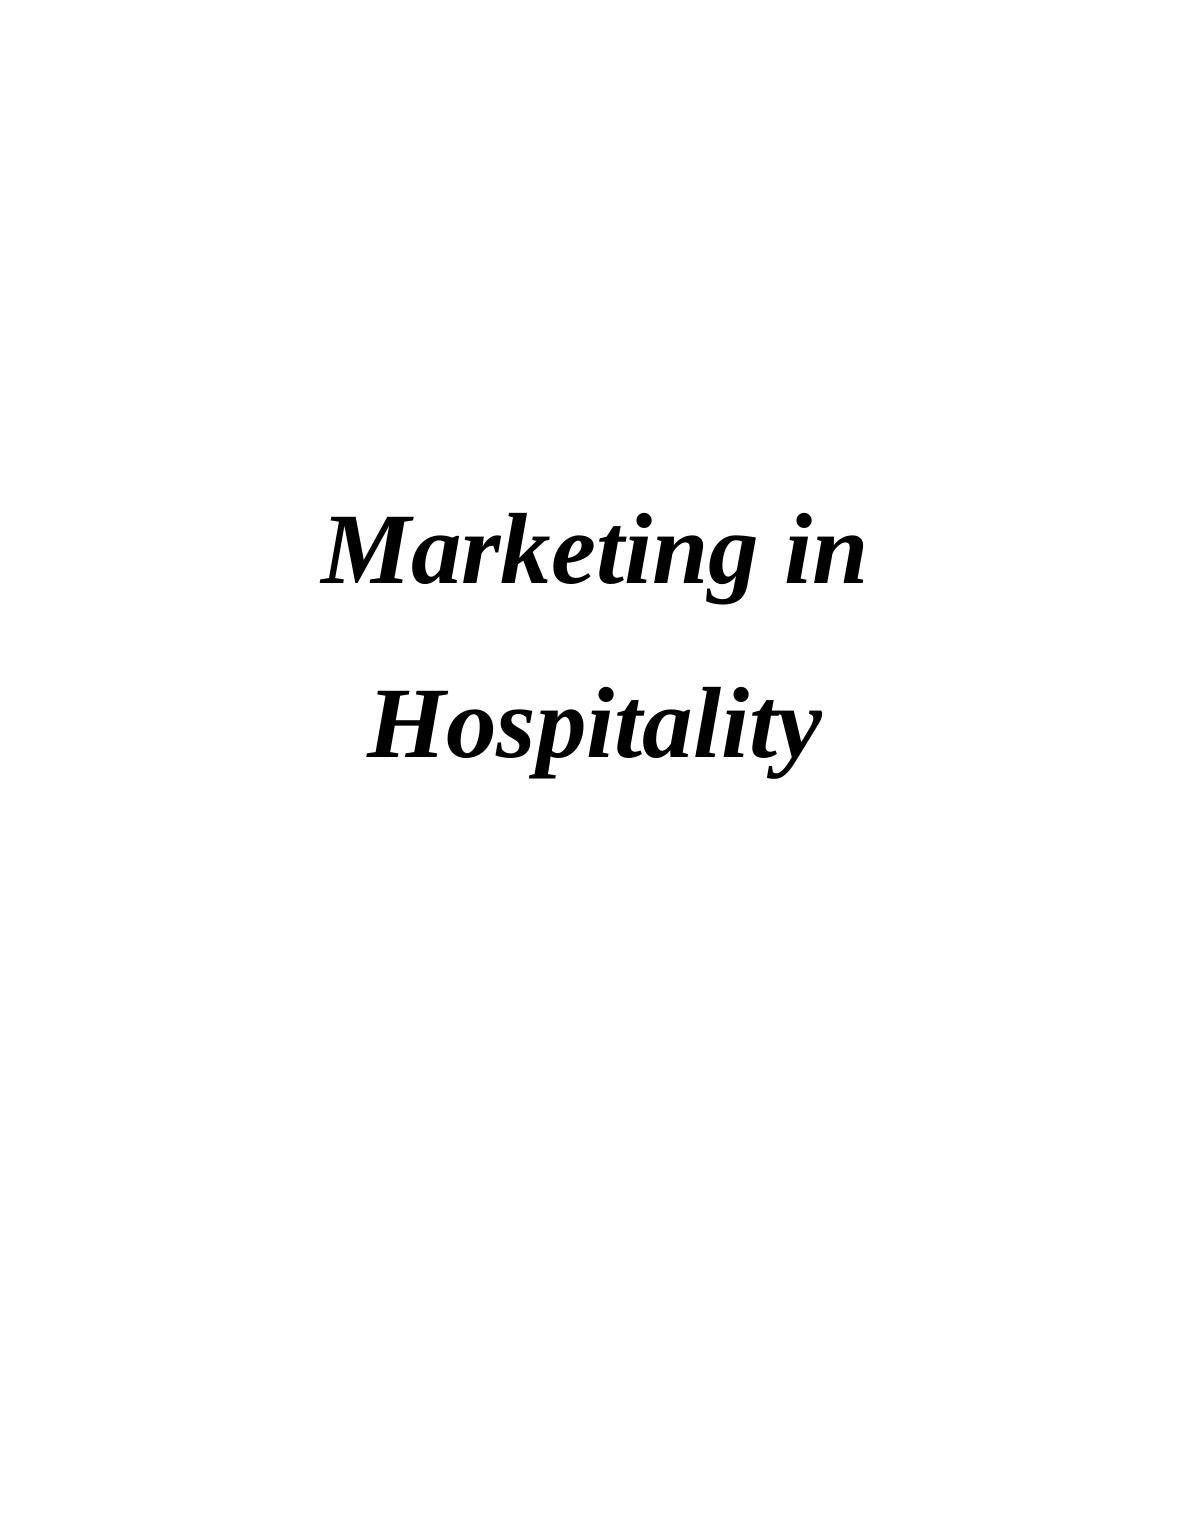 Marketing in Hospitality (Doc)_1